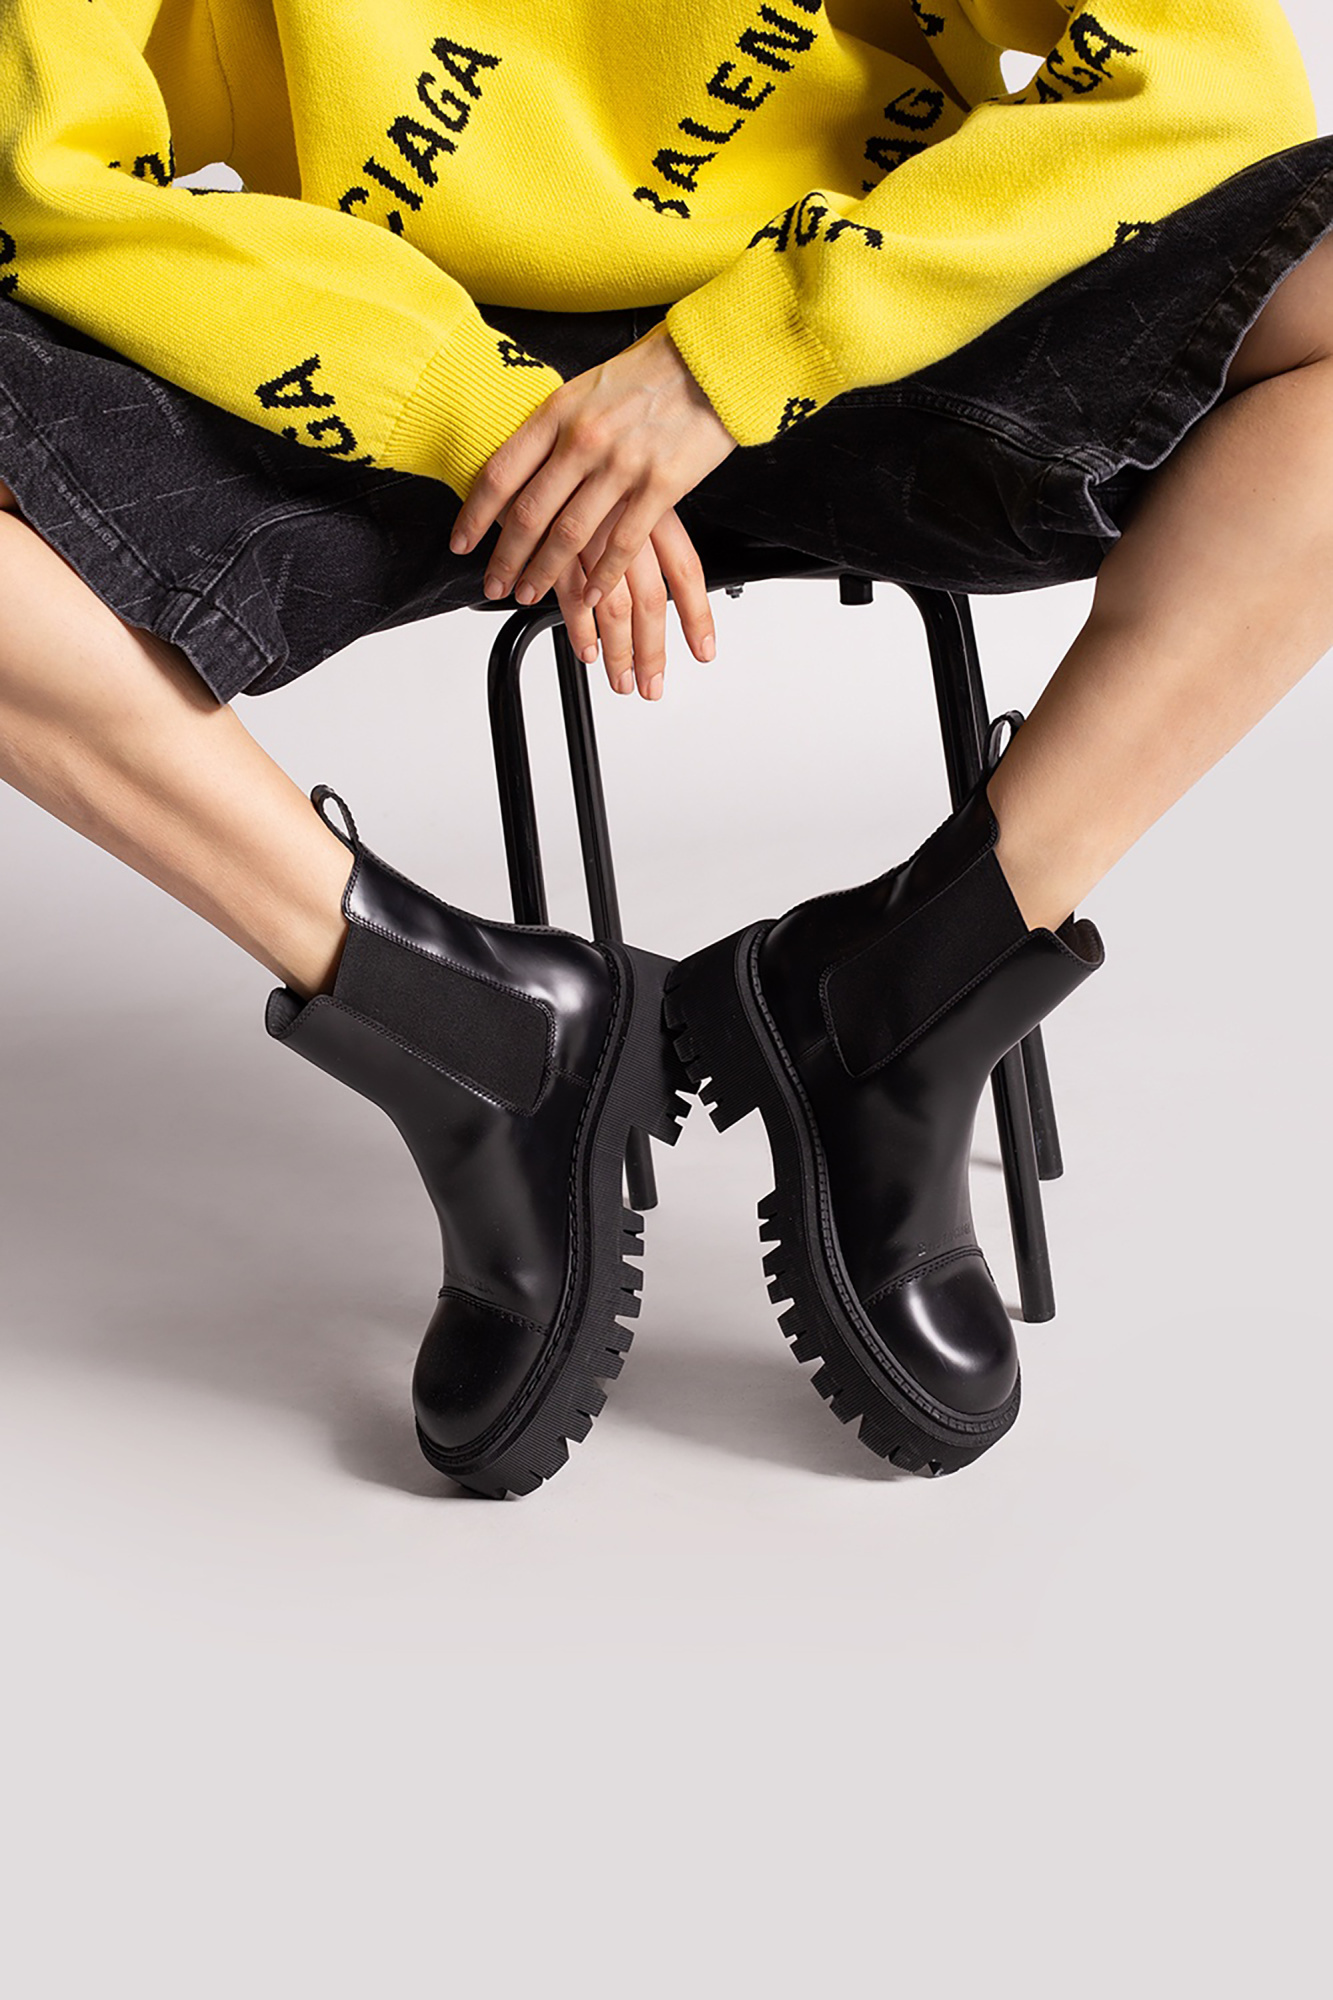 Balenciaga ‘Tractor’ platform Chelsea boots